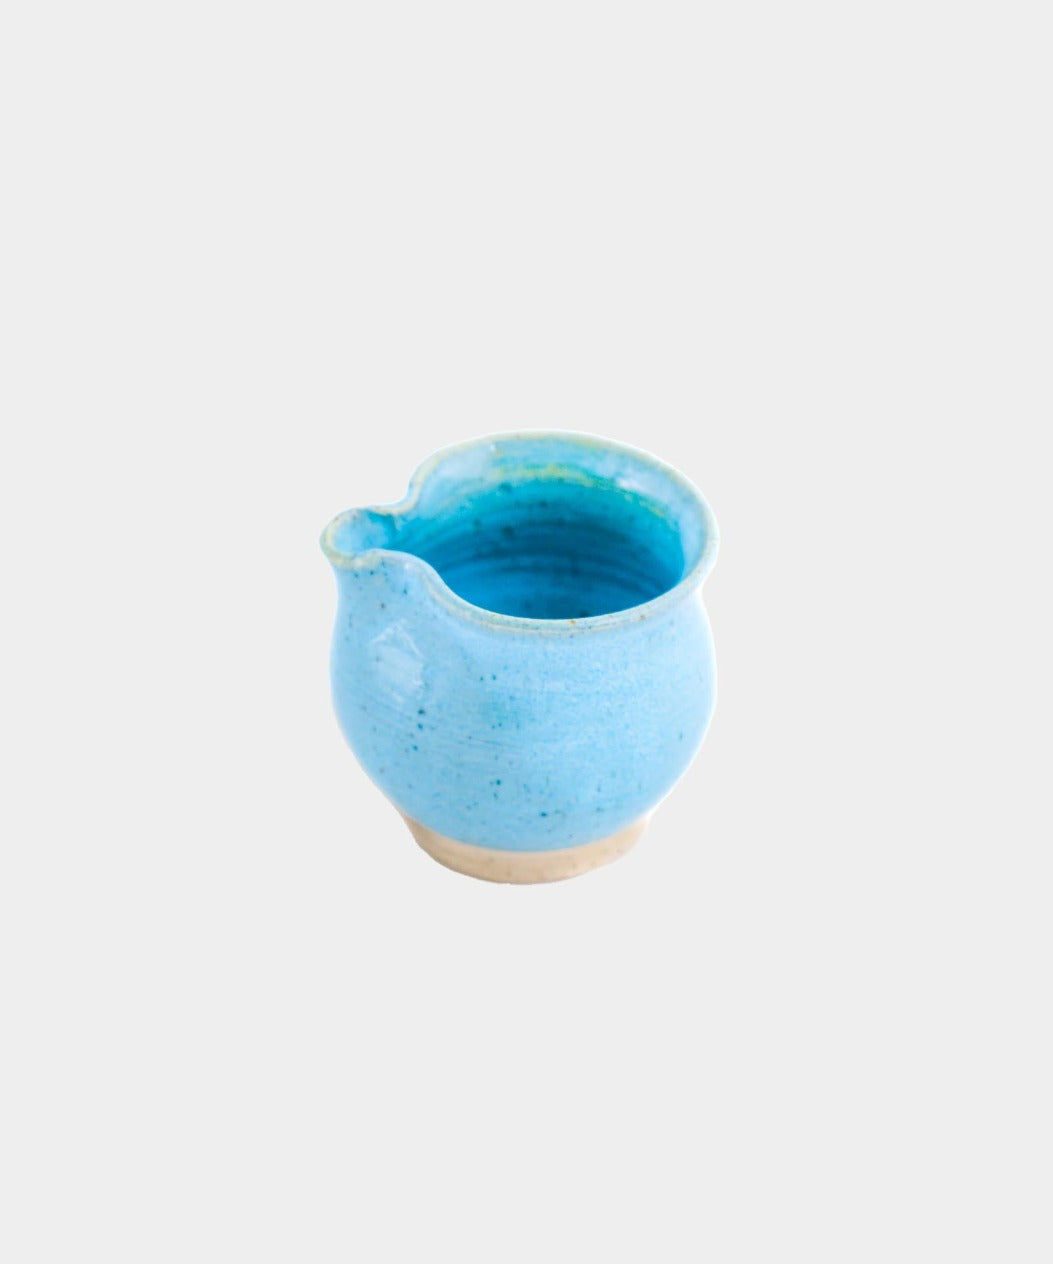 Håndlavet Keramik Flødekande | SKY by Vang | Kerama 2